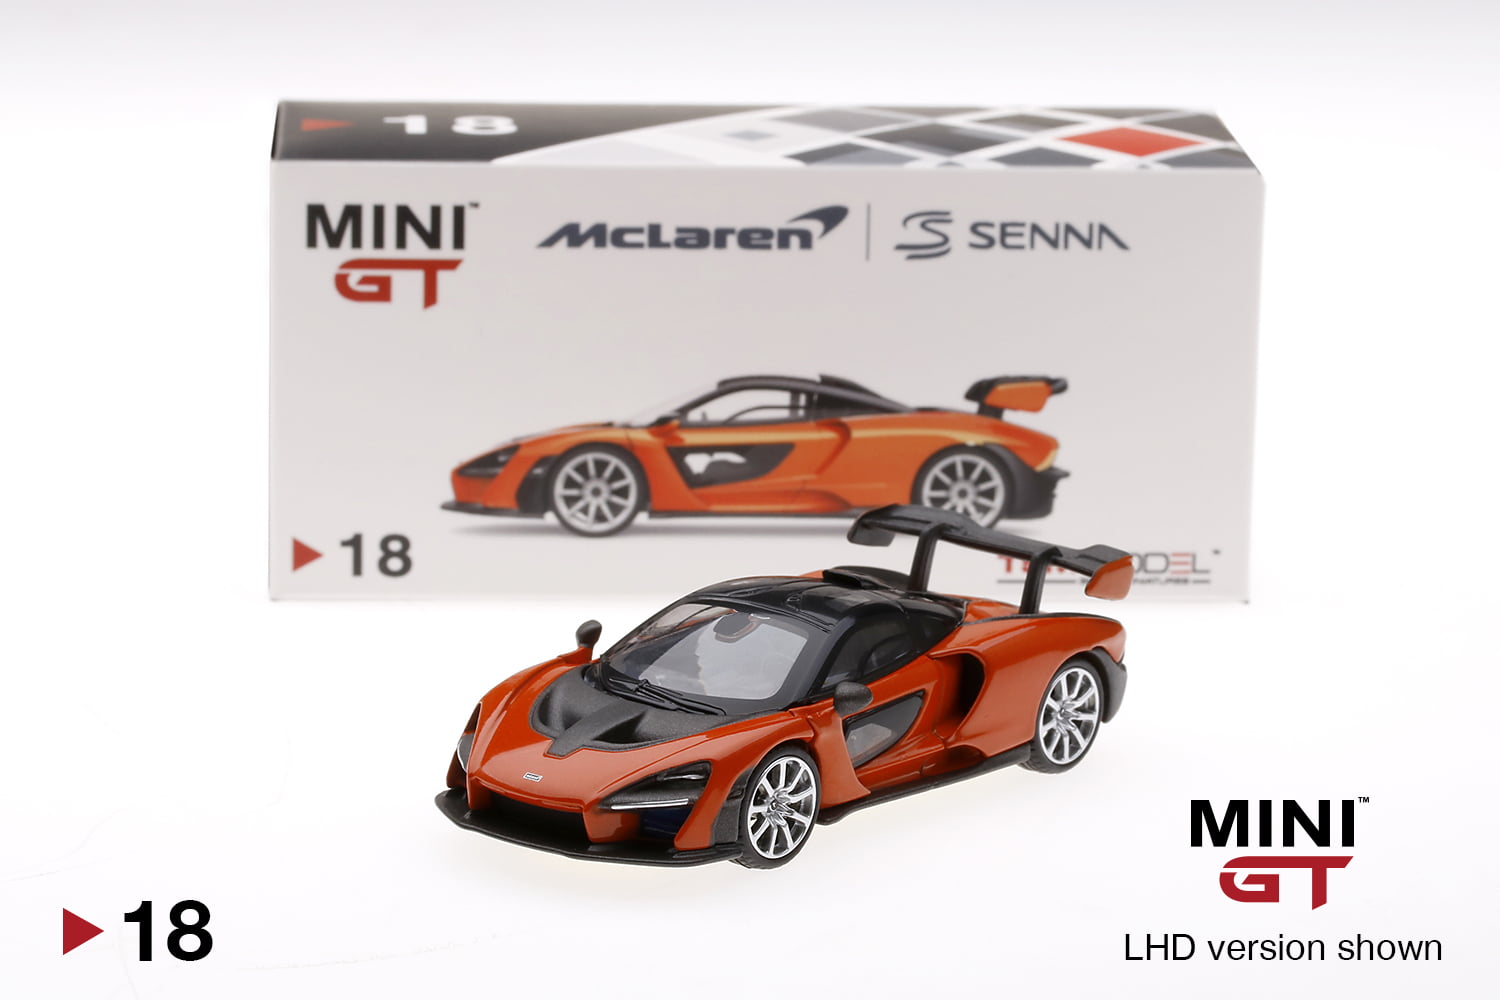 MINI GT MGT00018 McLAREN SENNA 1/64 DIECAST MODEL CAR ORANGE